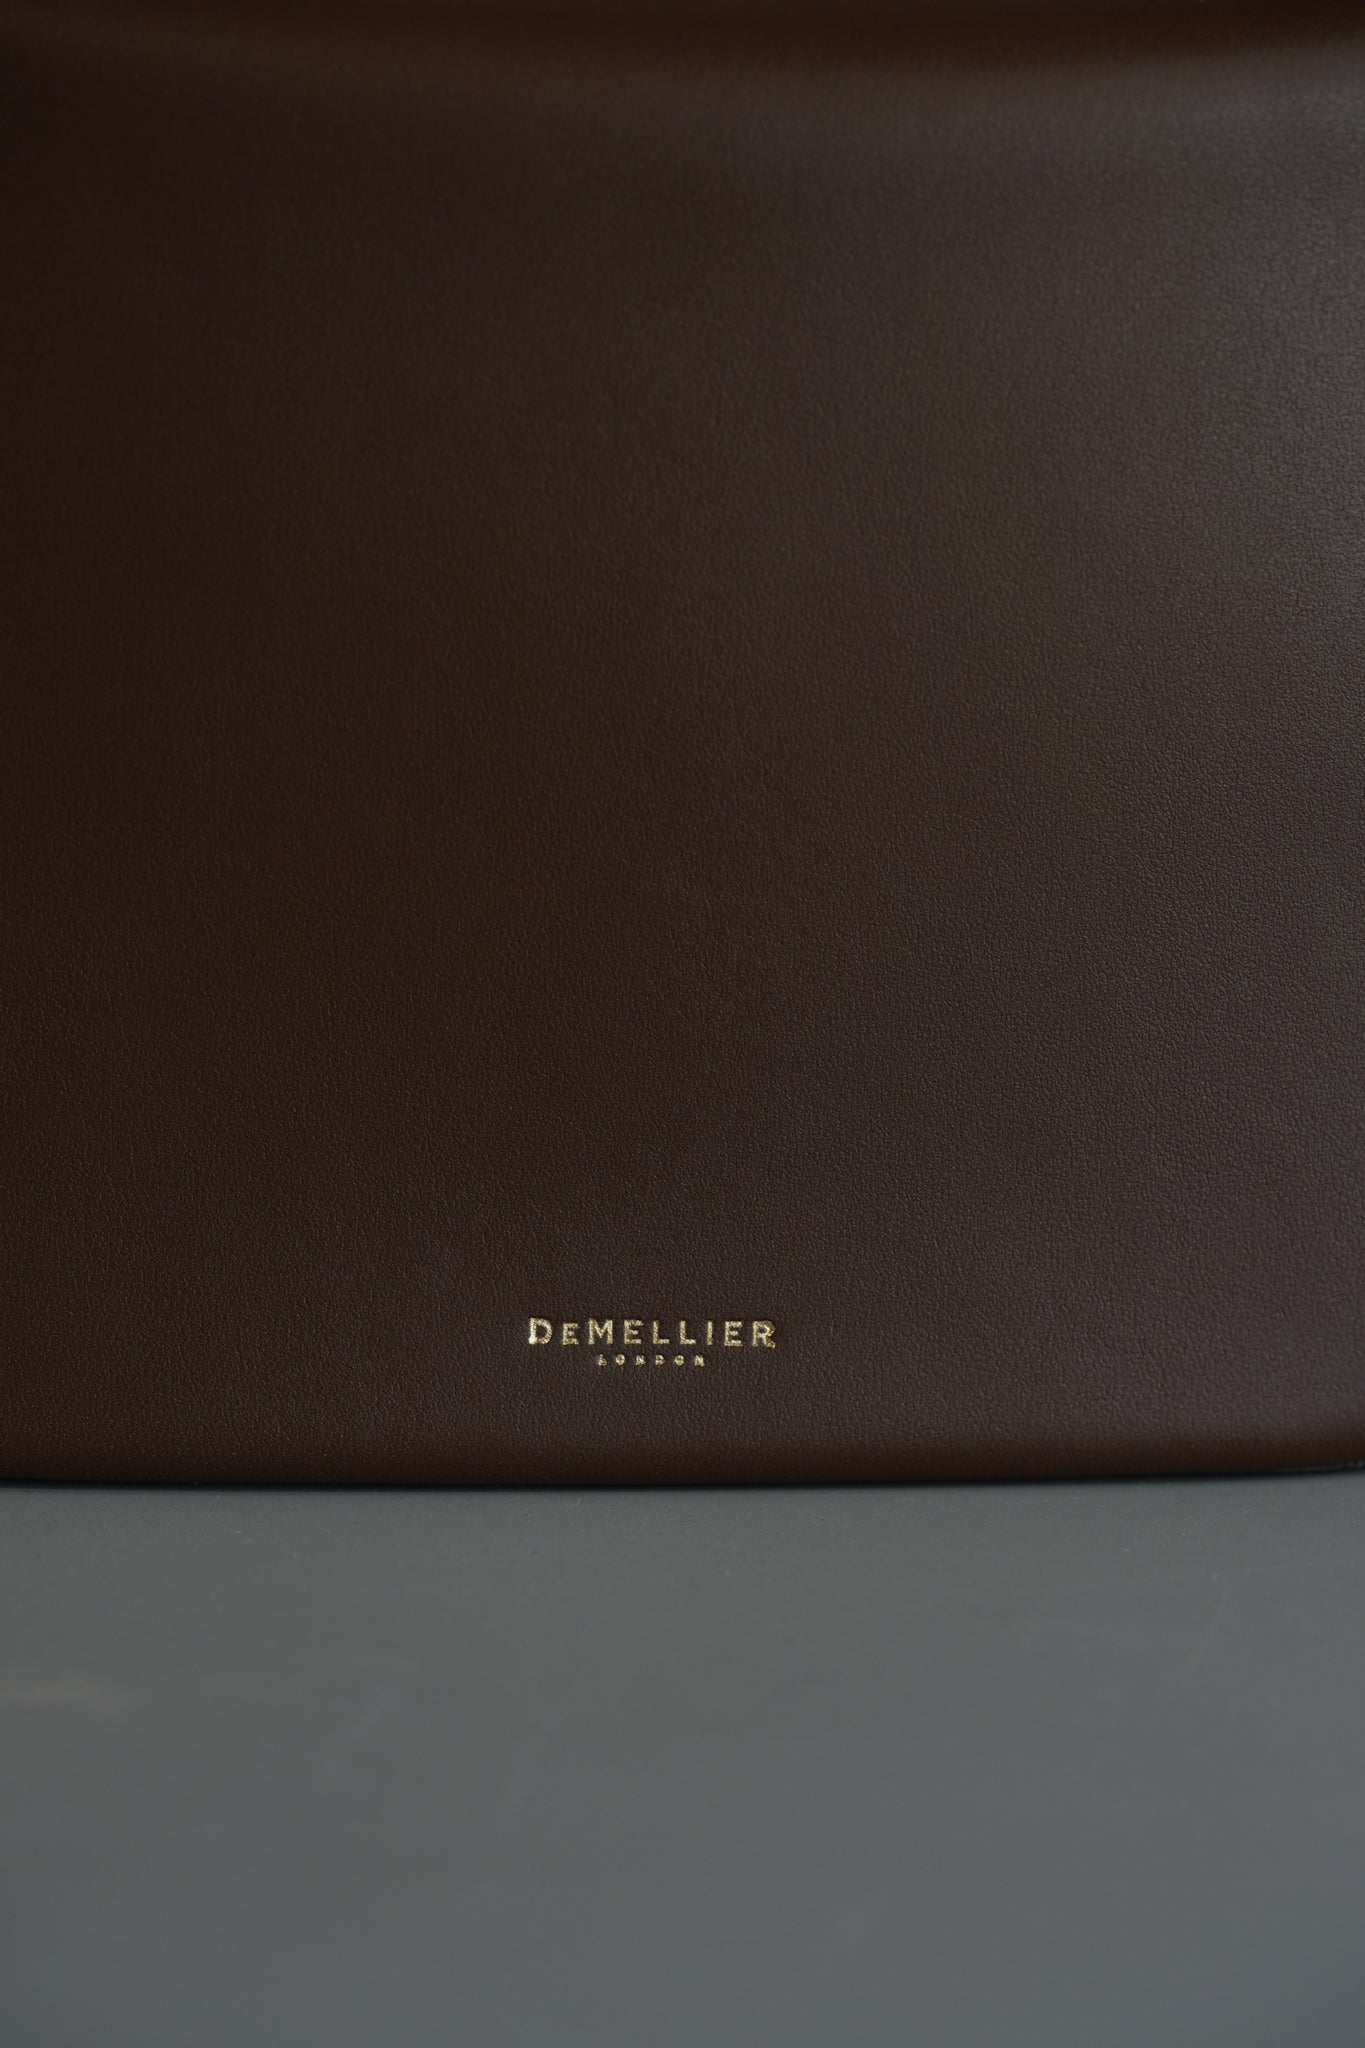 Demellier Bergen Top Handle Bag in Brown | Purse Maison Luxury Bags Shop